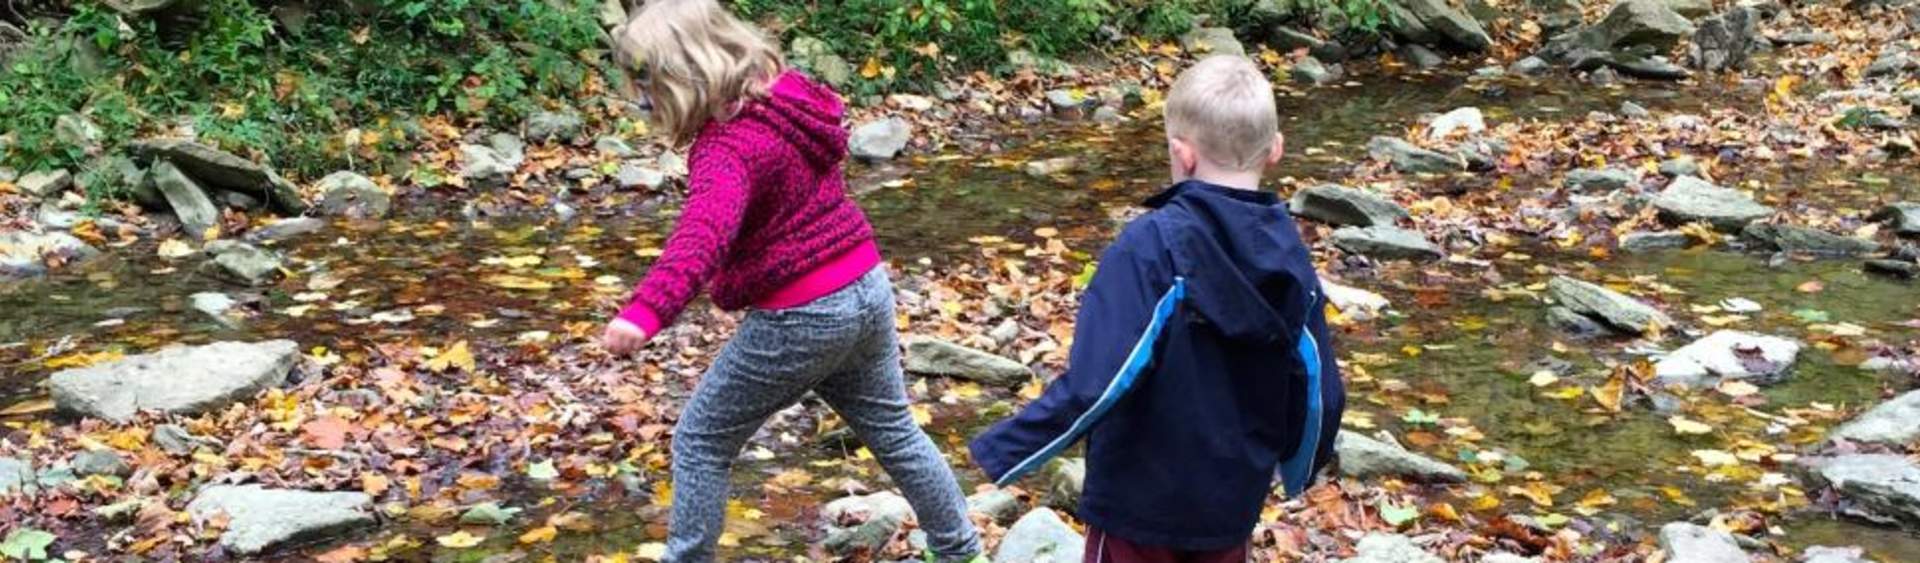 Best Family-friendly Hikes in Cincinnati & Northern Kentucky